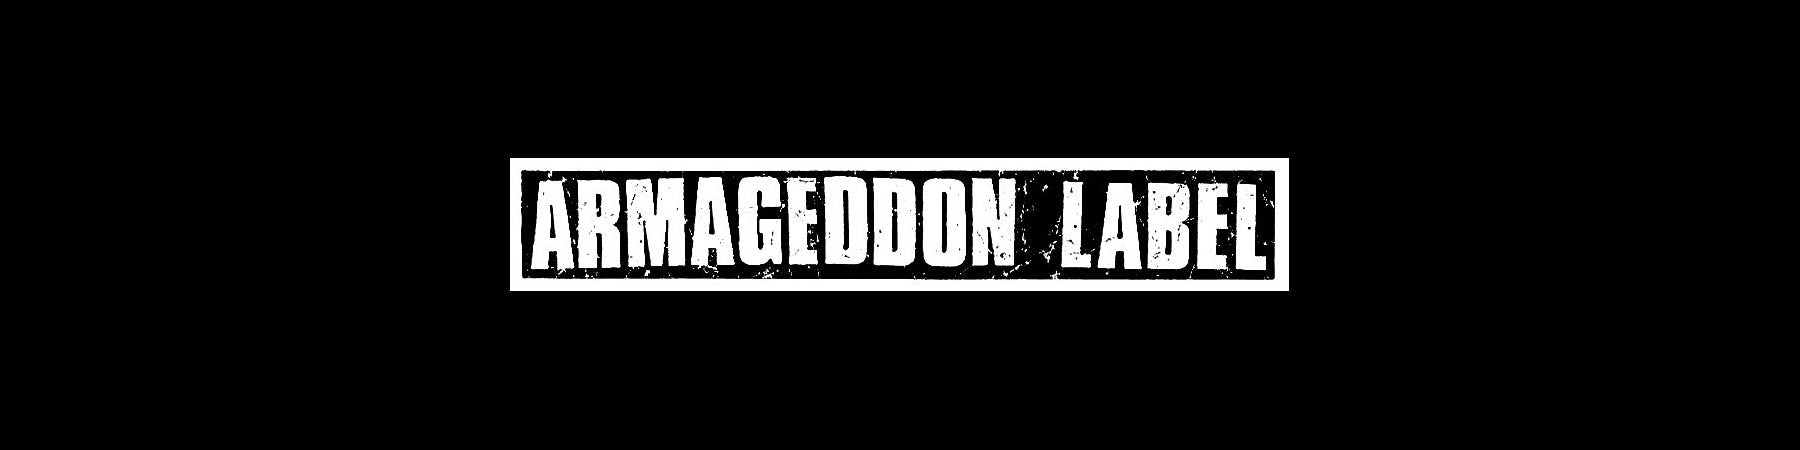 Armageddon Label